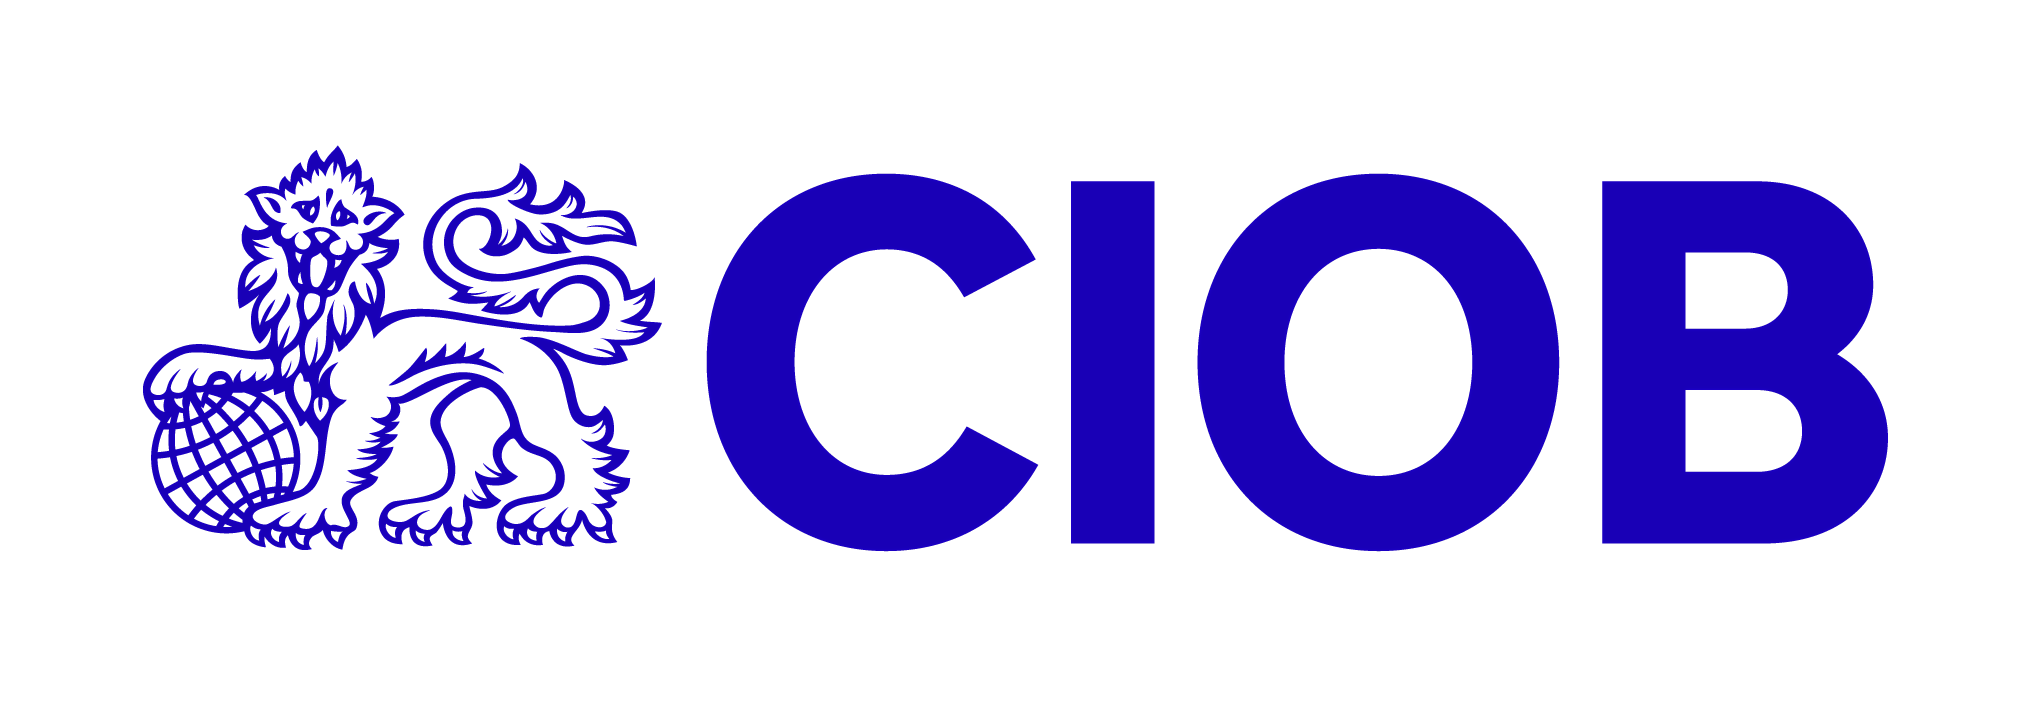 CIOB-web-blue-logo